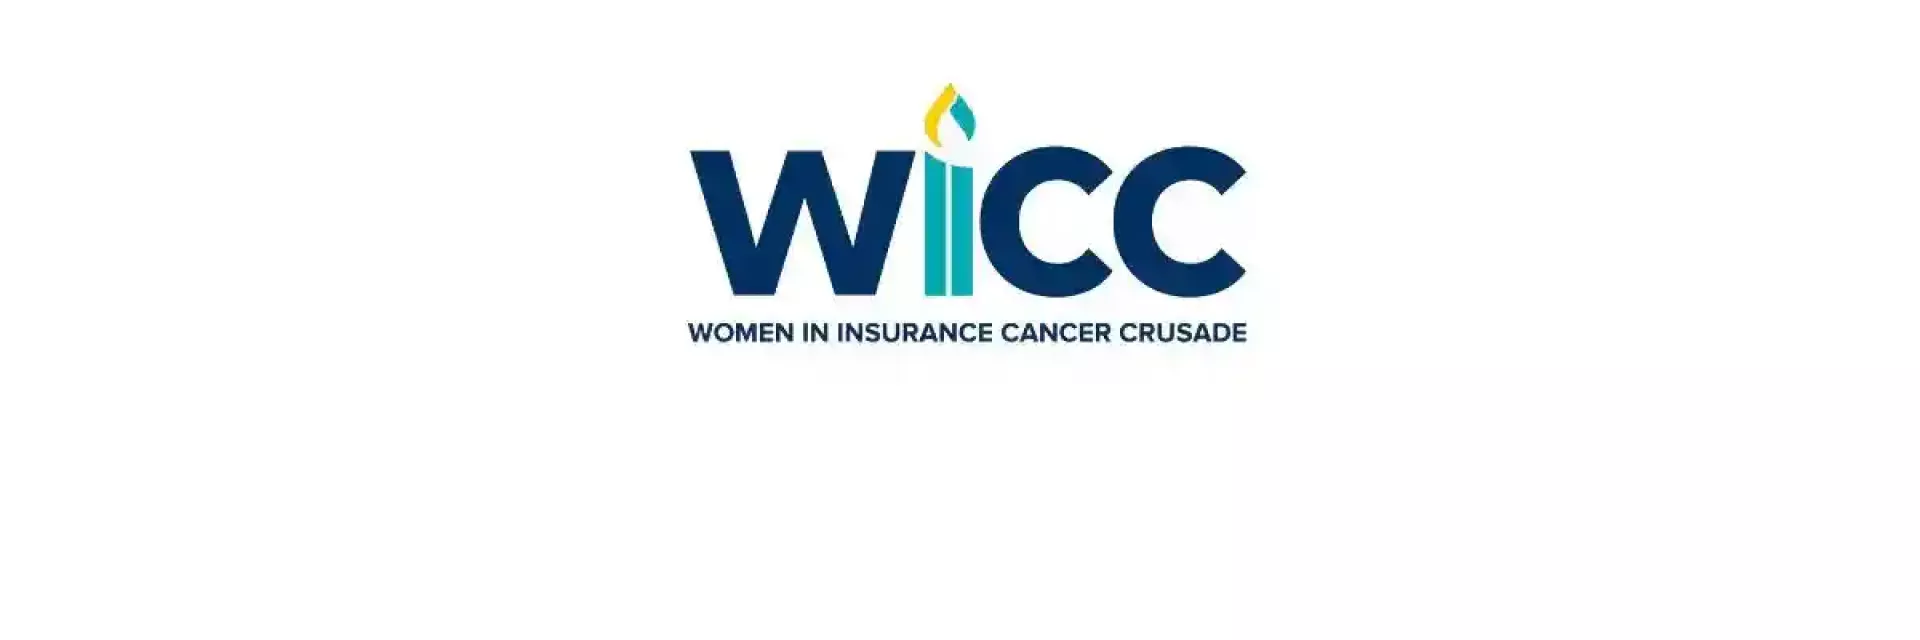 Women In Insurance Cancer Crusade logo